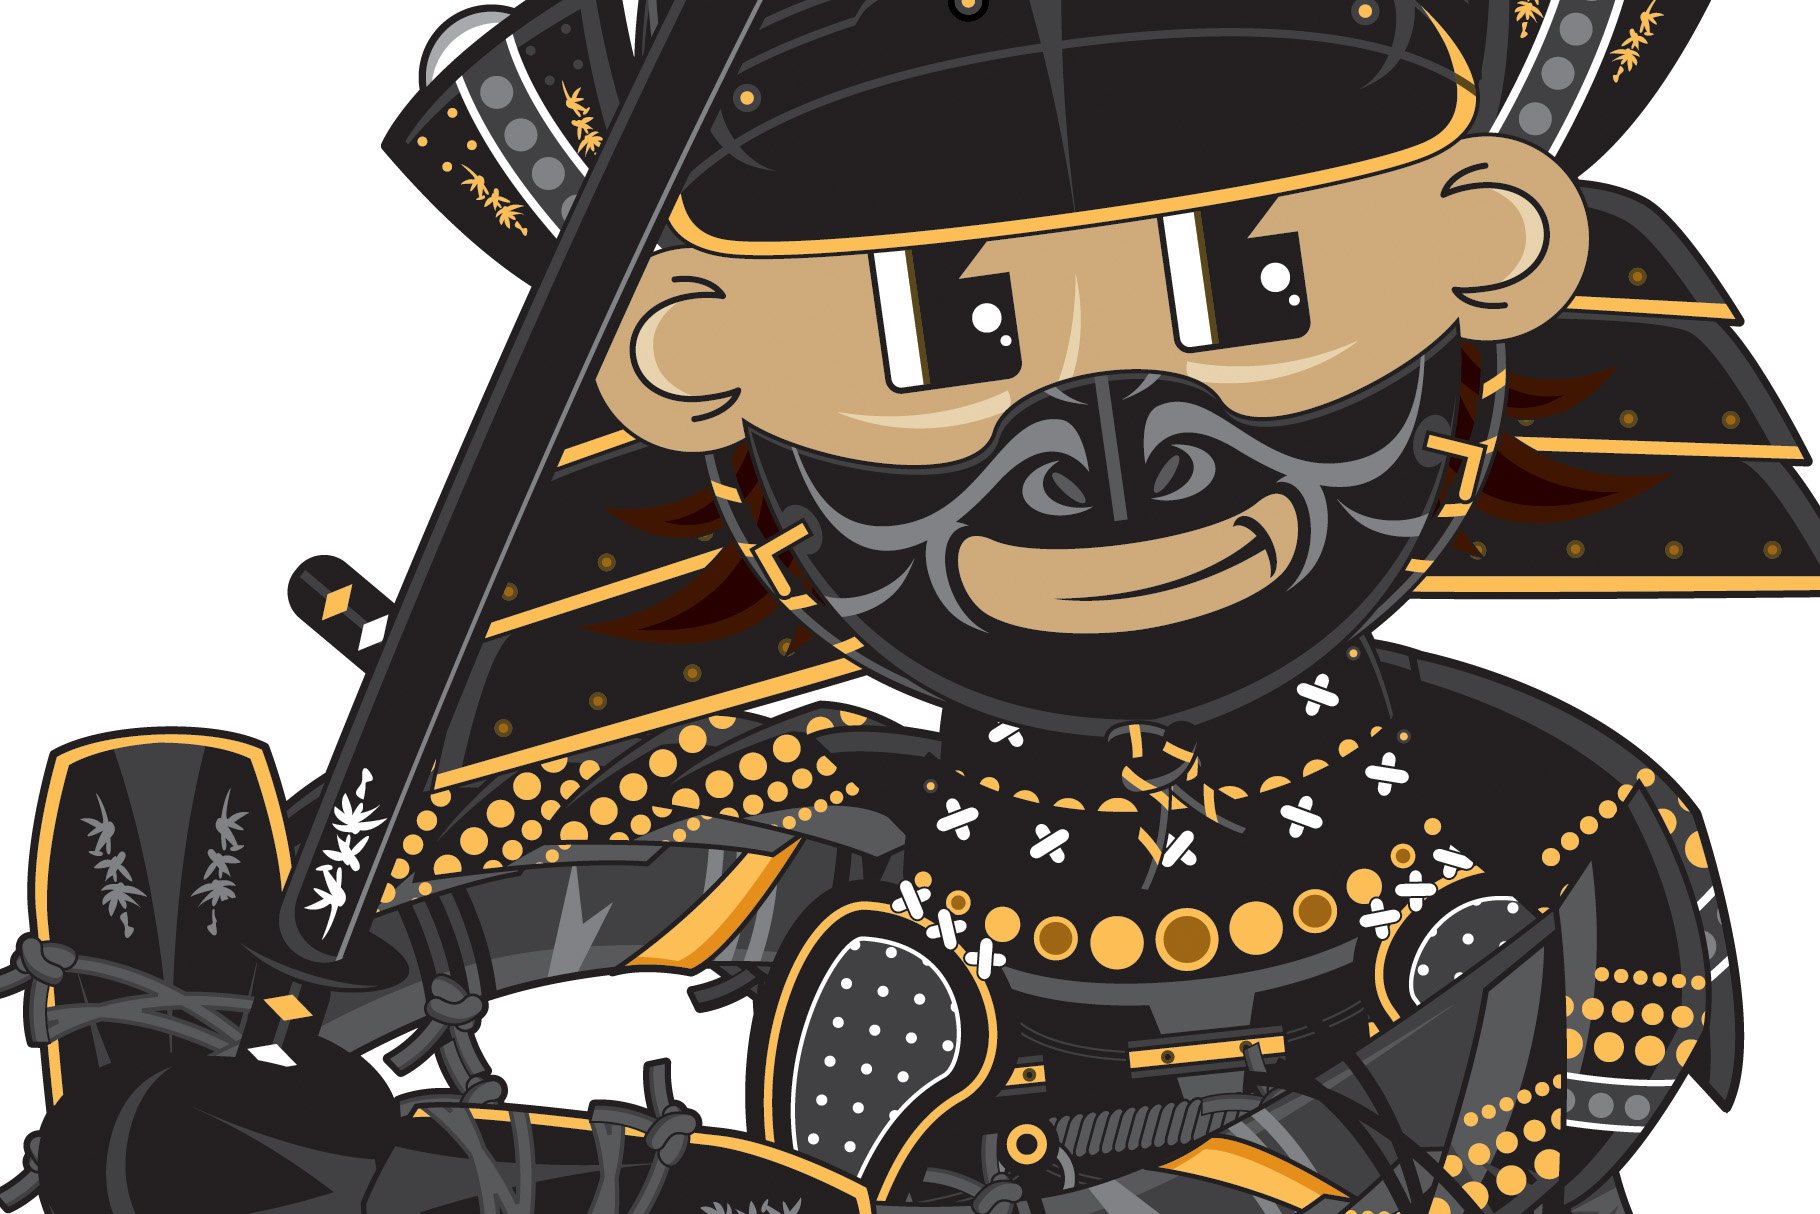 Fierce Samurai Warrior preview image.